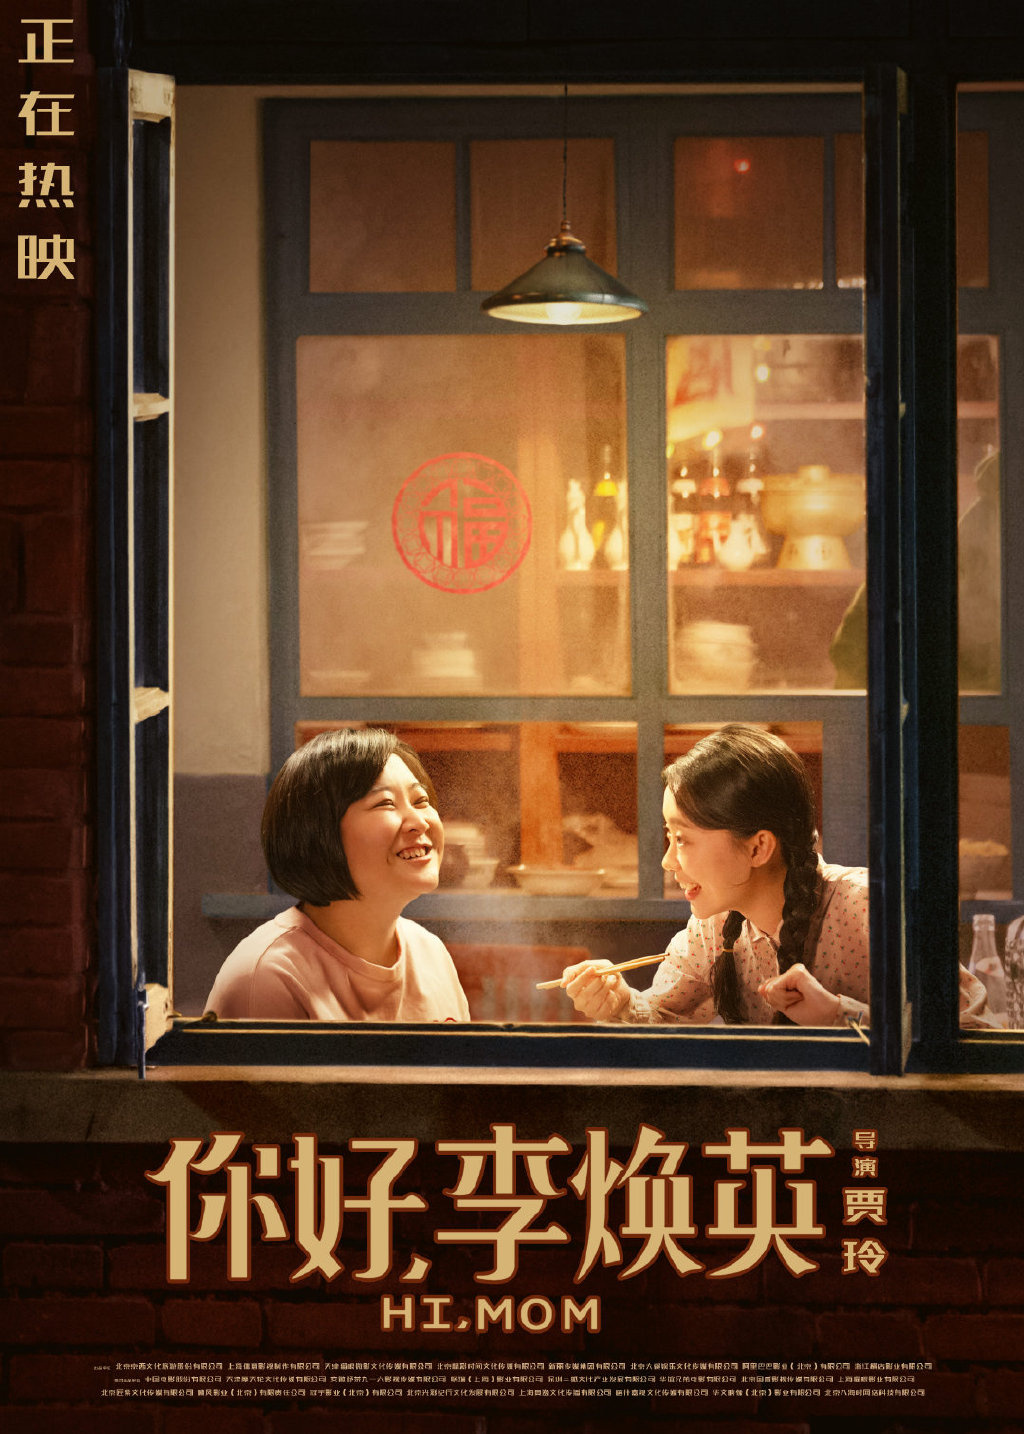 Ni Hao, Li Huan Ying download the new version